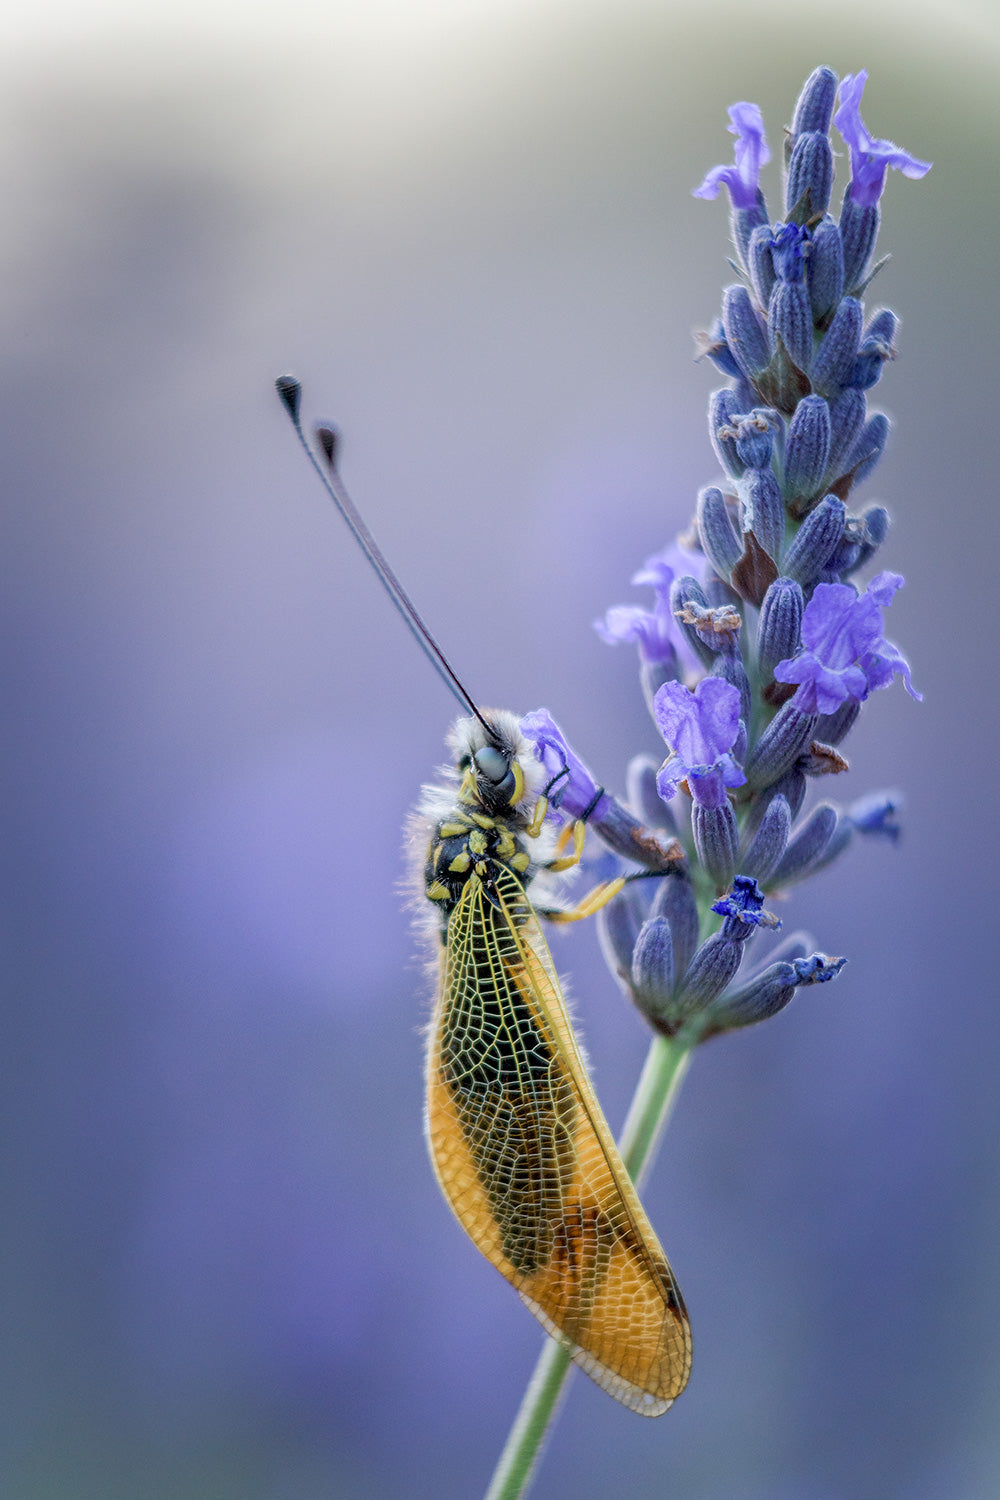 Libelloides on lavender flower